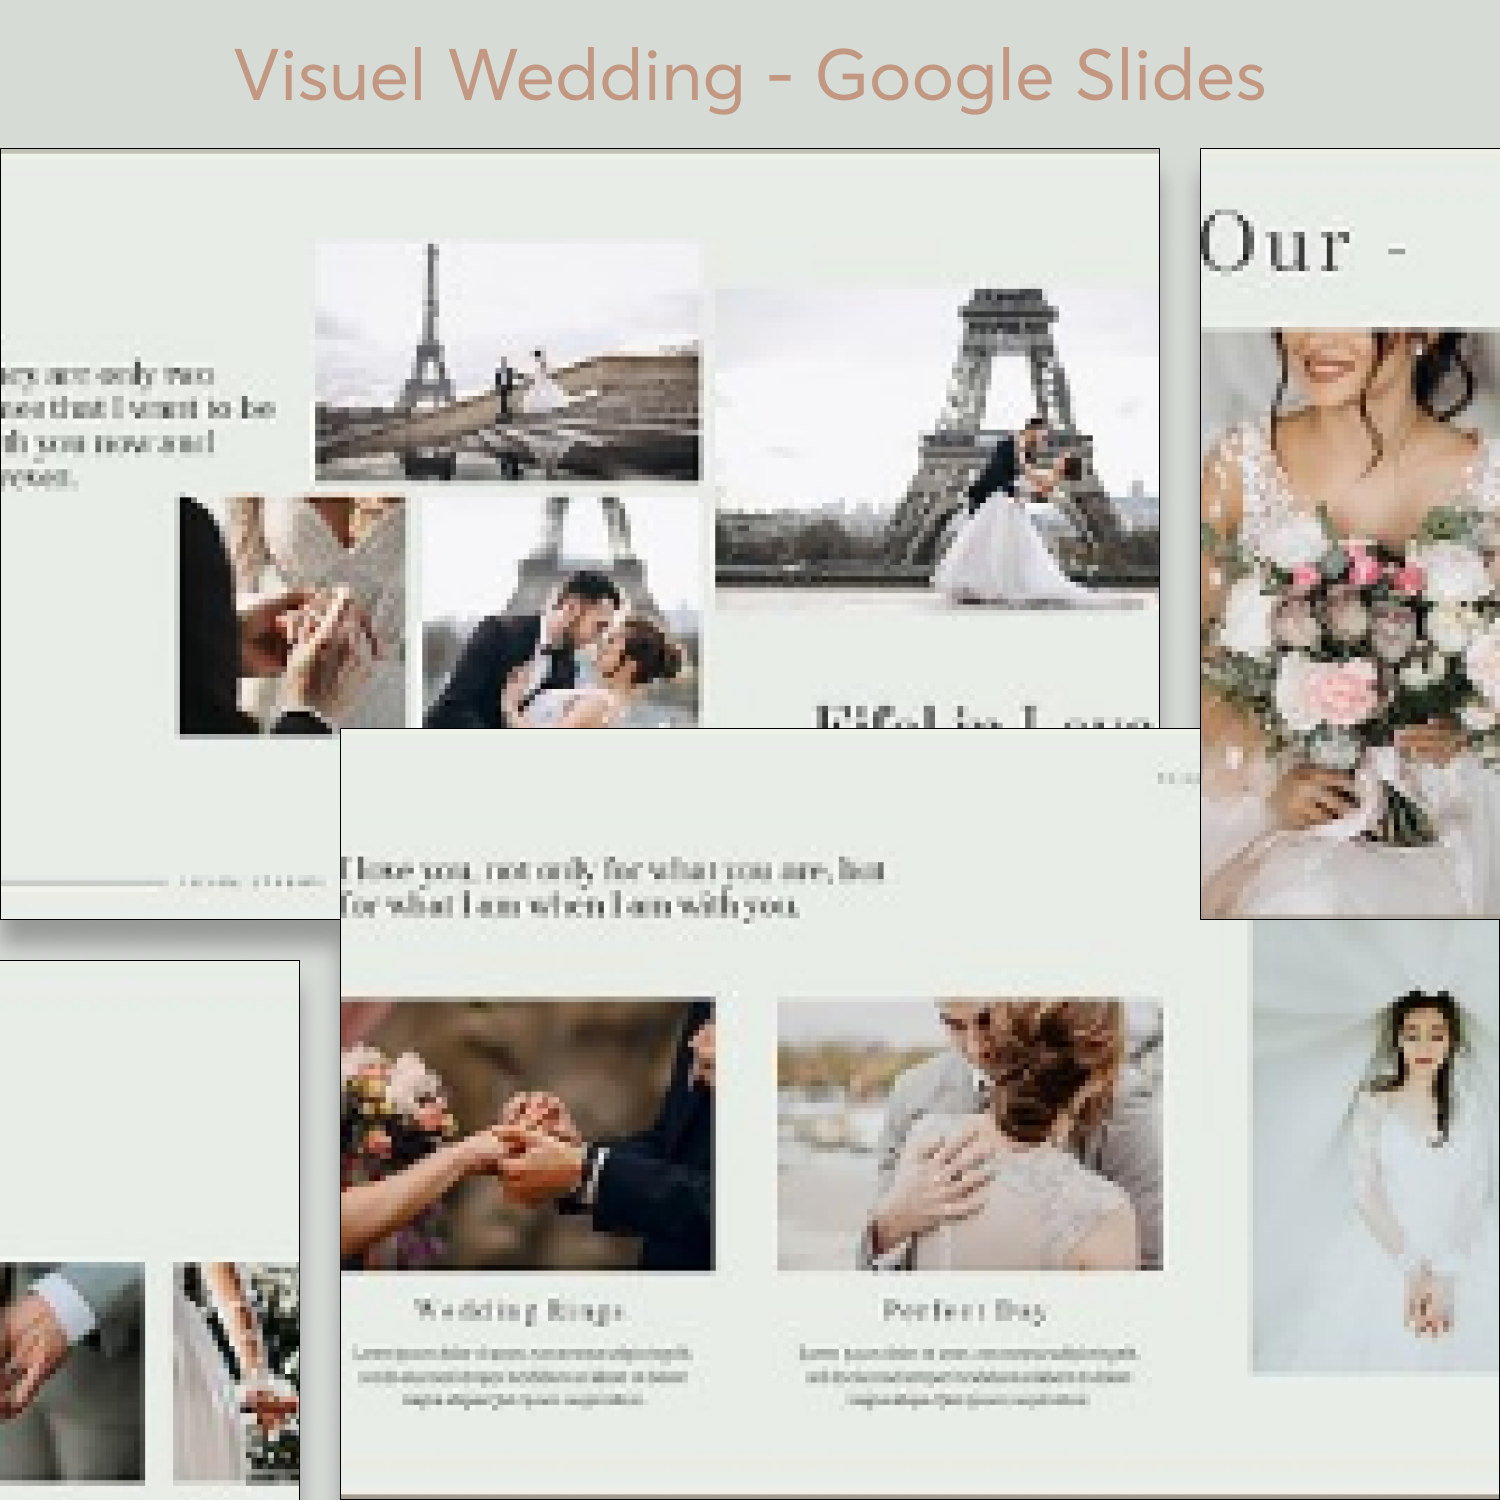 Visuel Wedding - Google Slides cover.